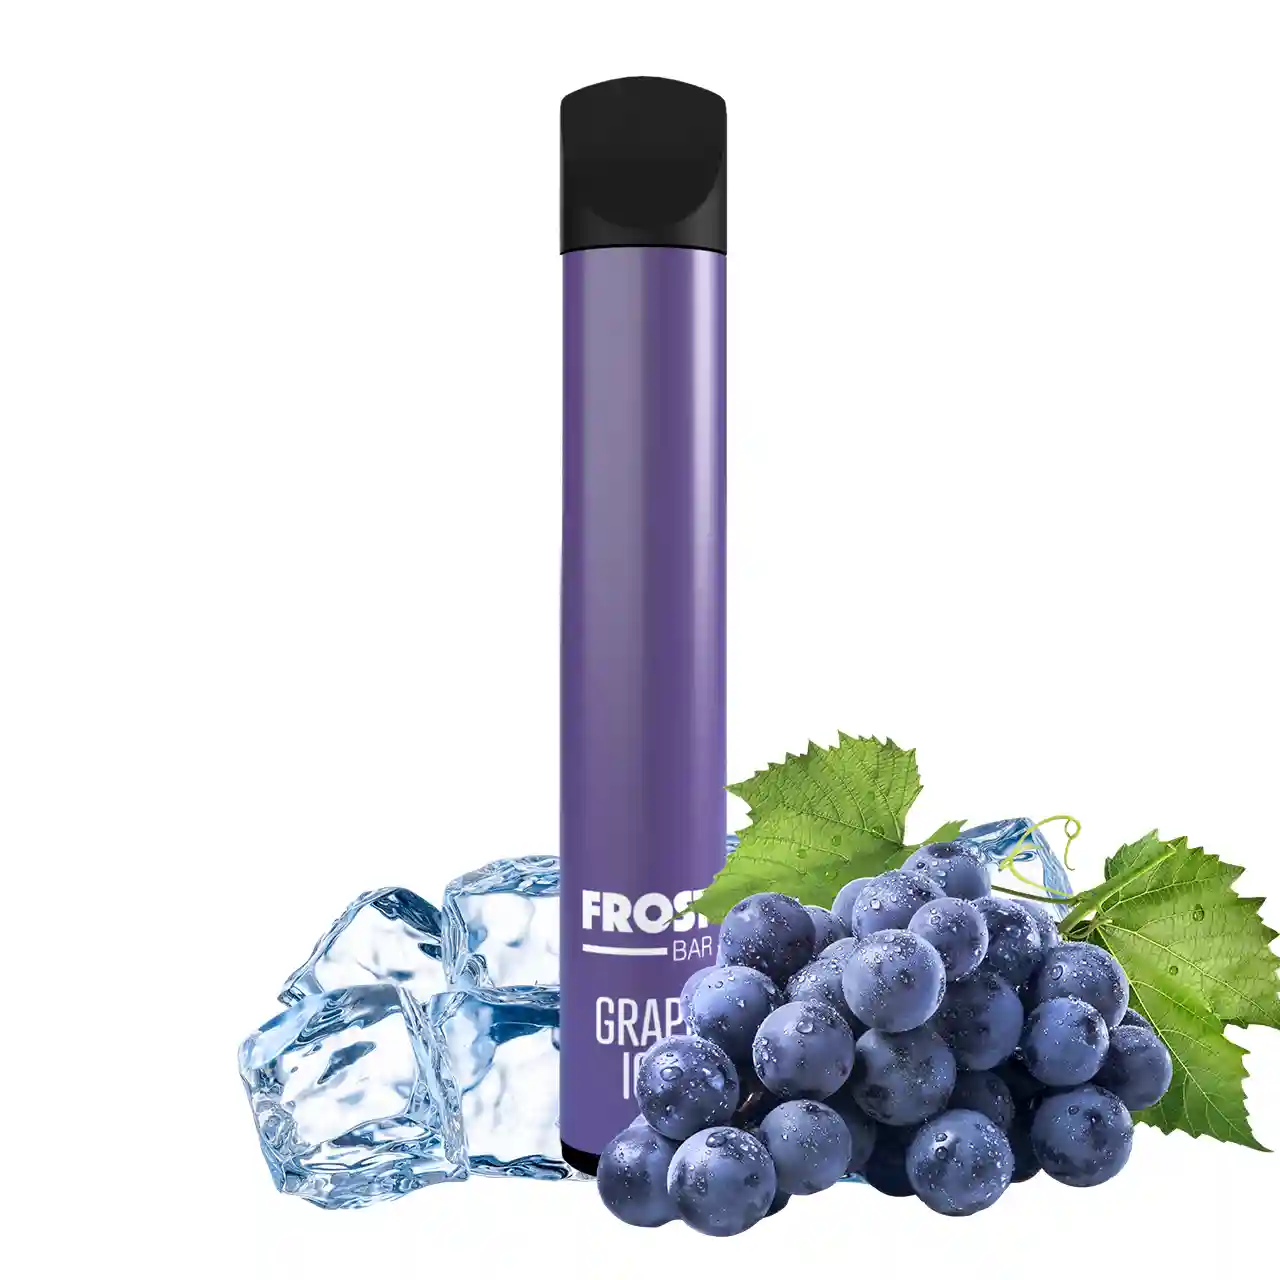 Frost Bar Grape Ice